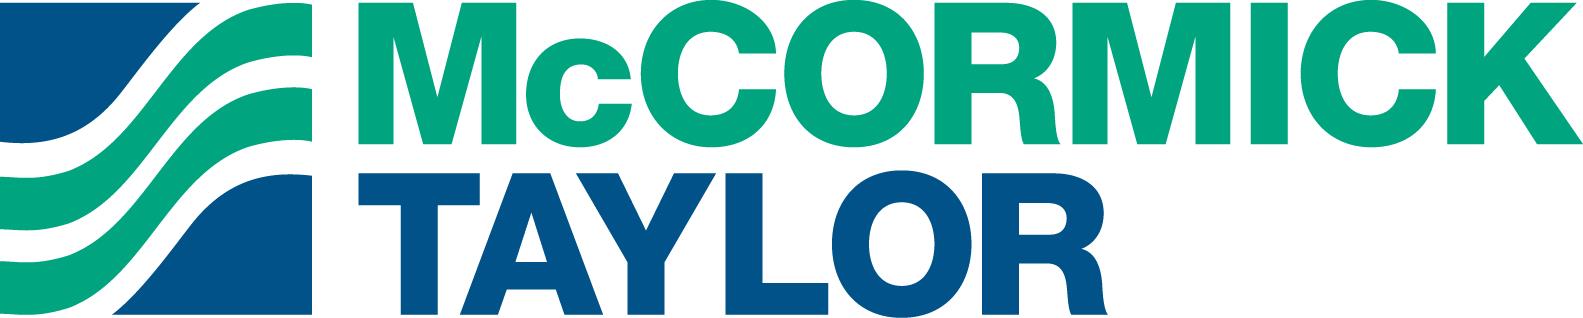 McCormick Taylor - logo